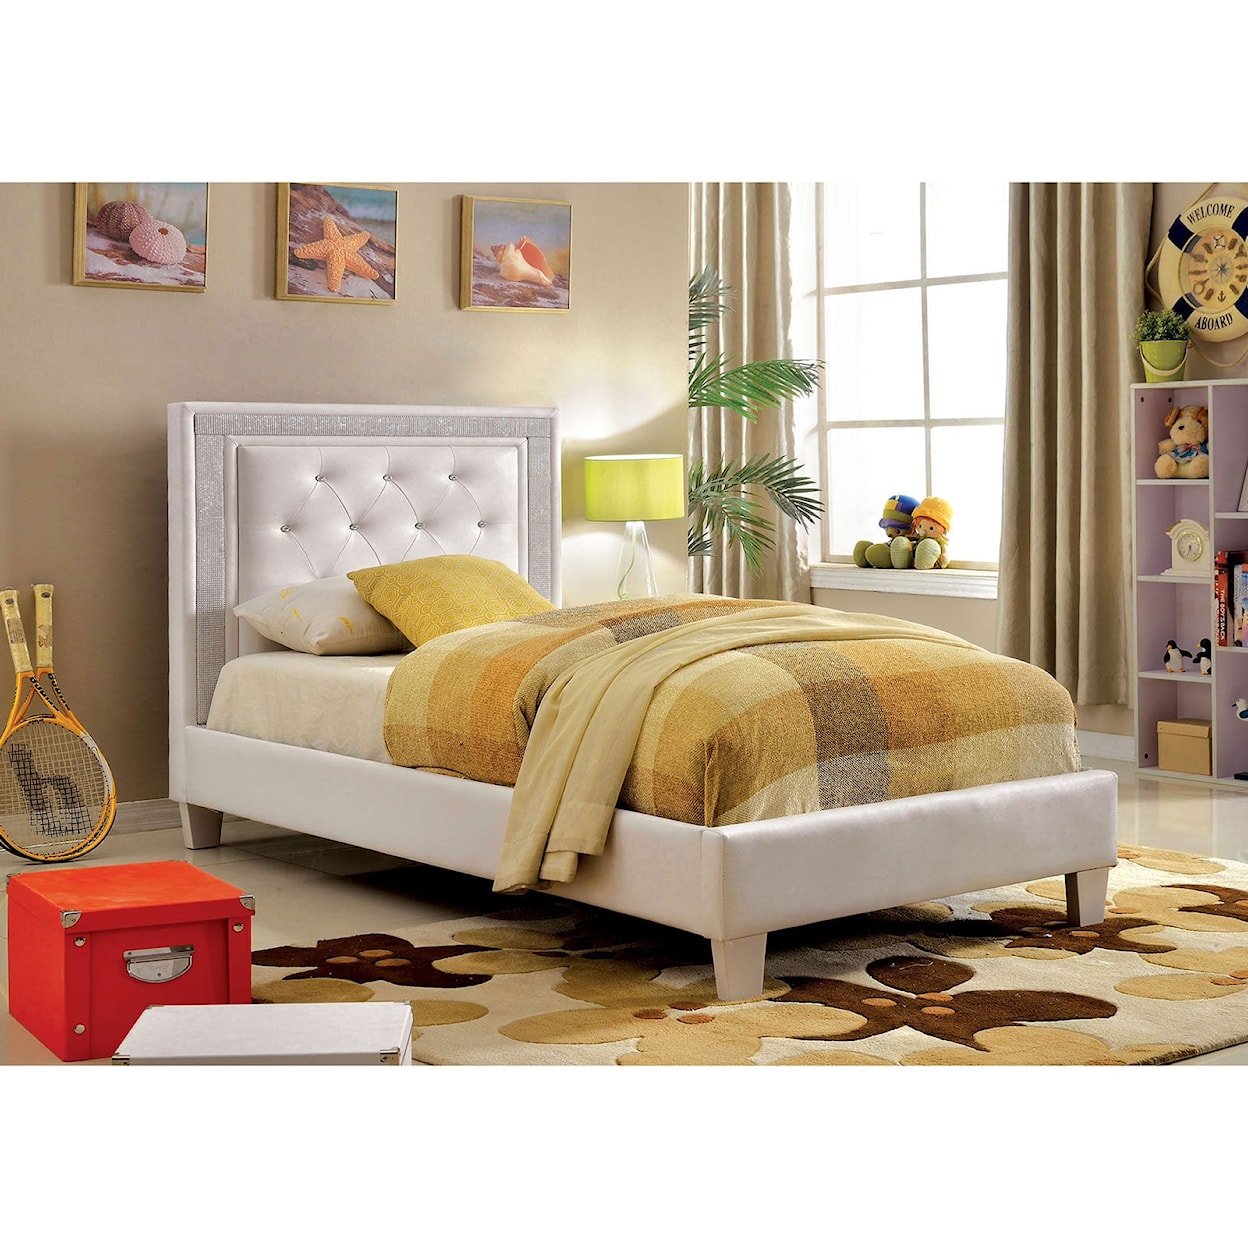 Furniture of America Lianne Full Bed